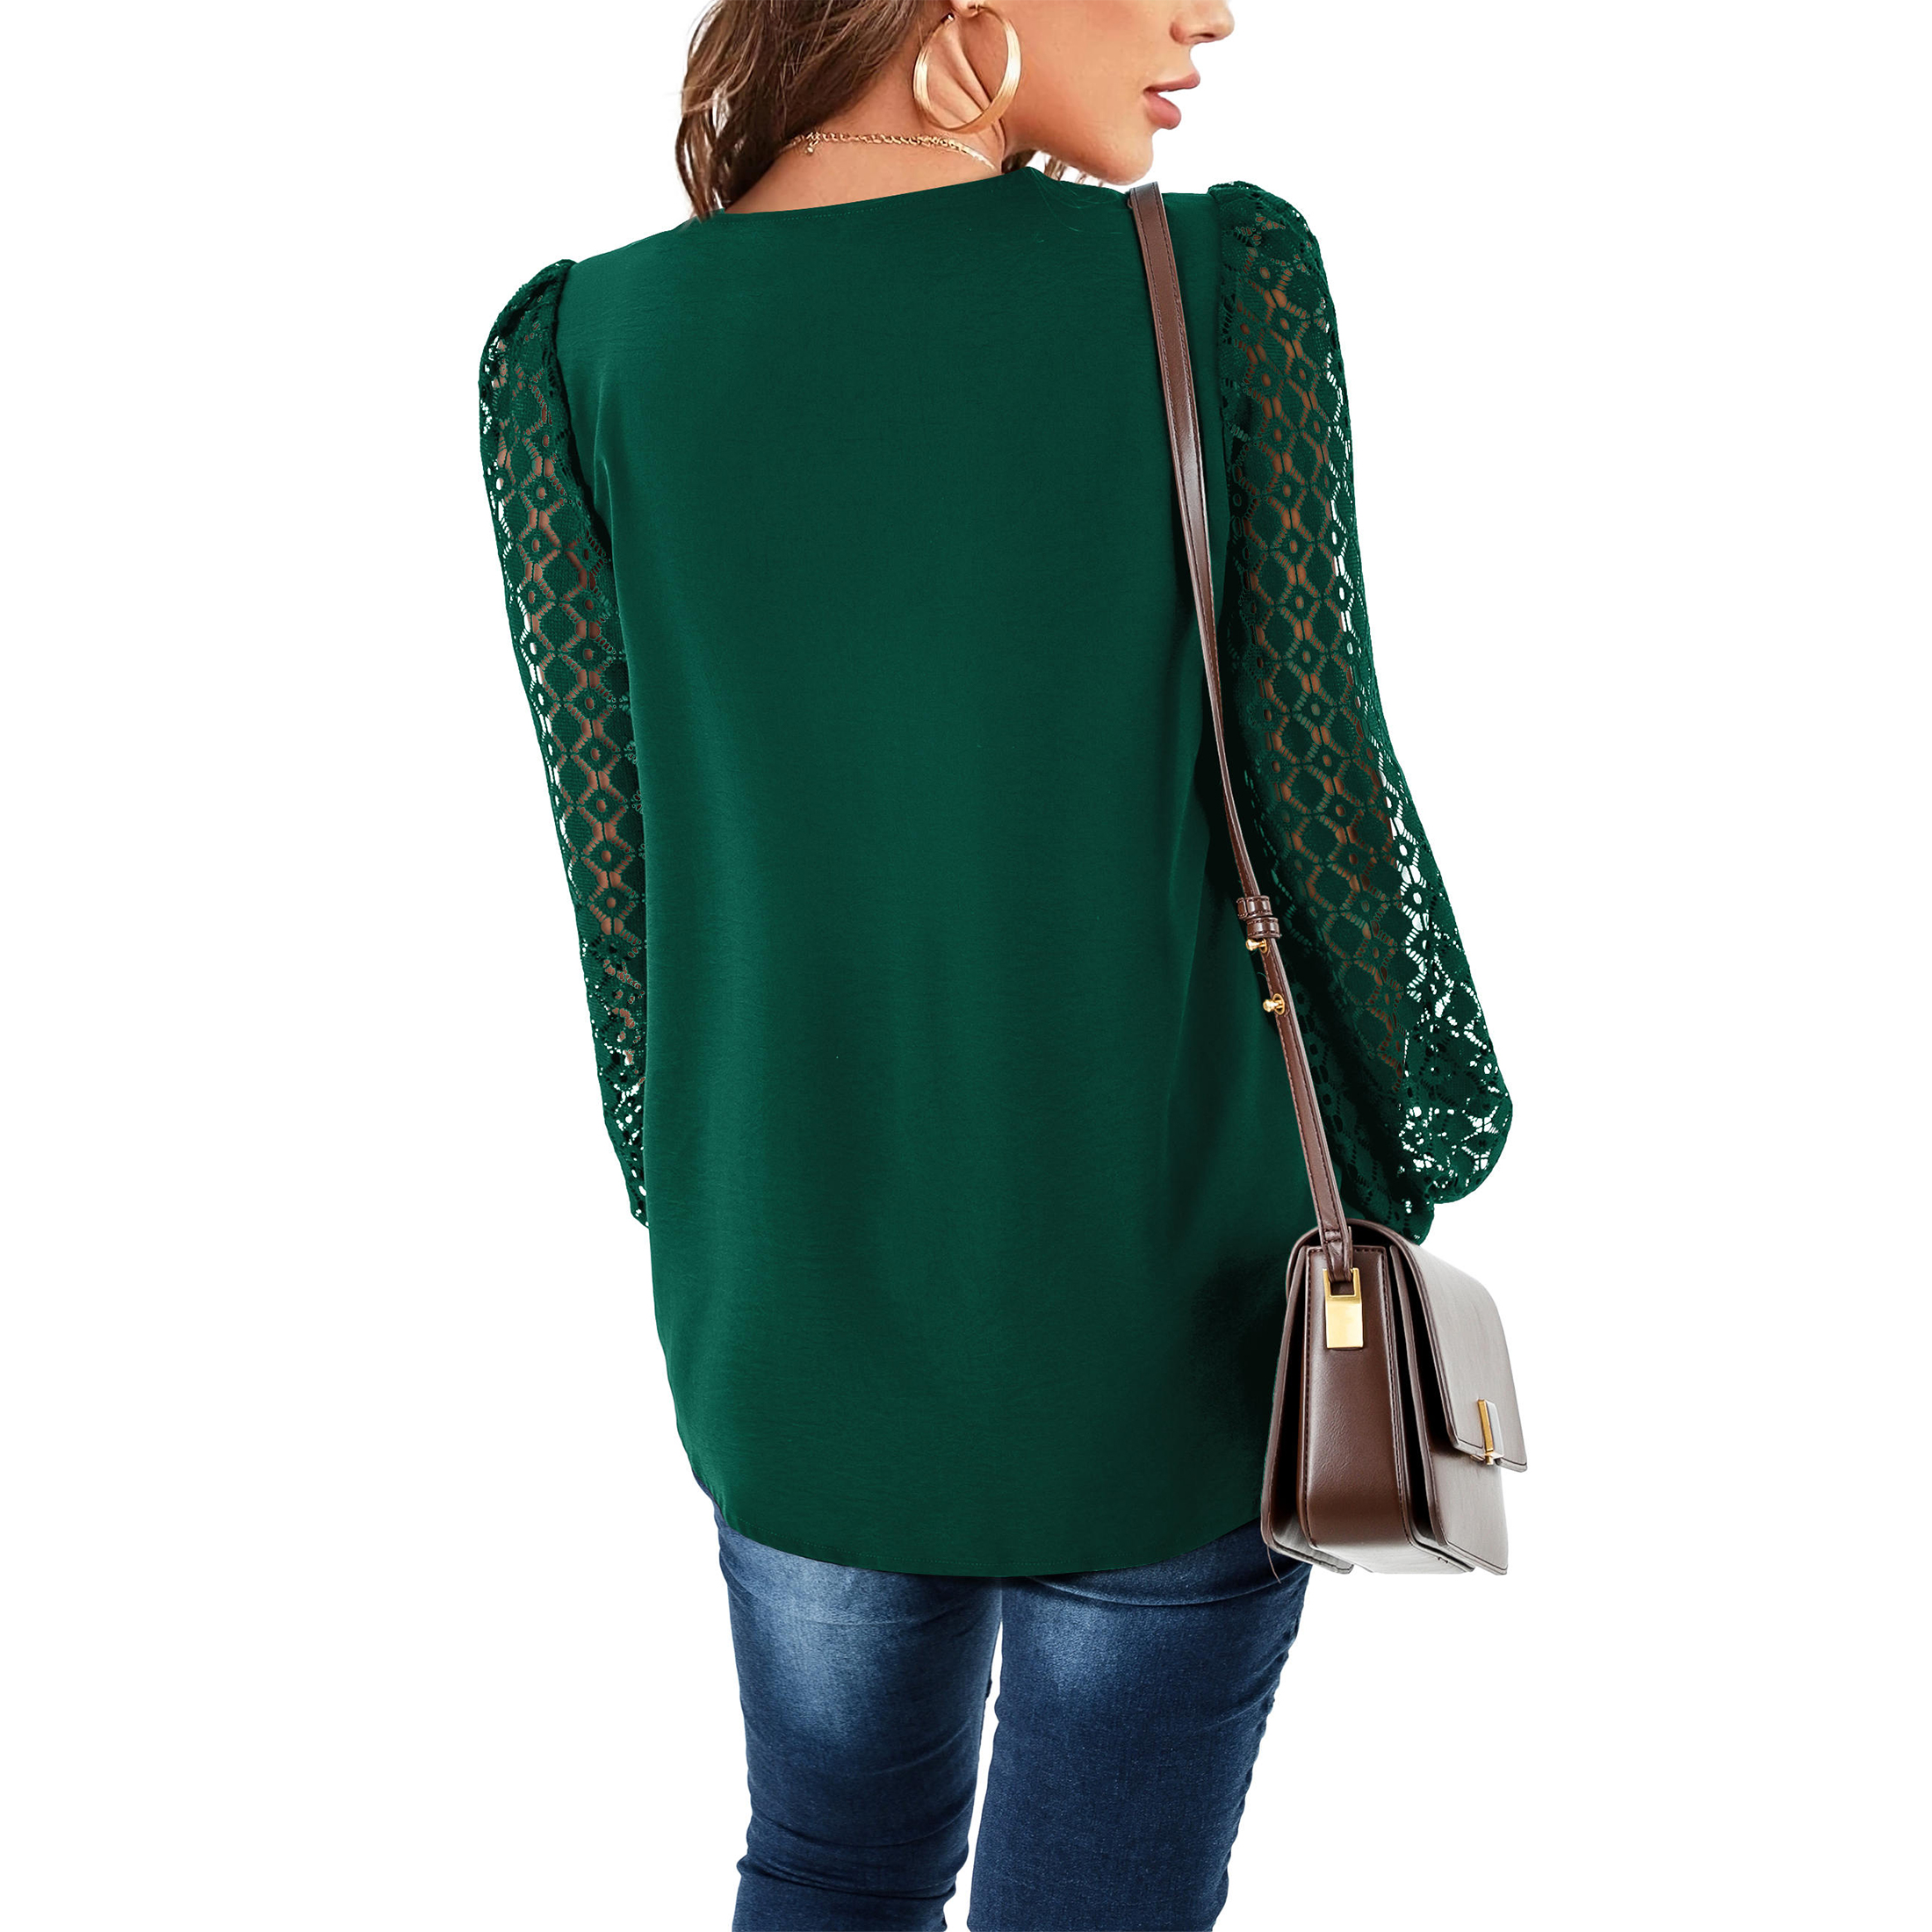 Amoretu Womens Shirts Casual V Neck Long Sleeve Blouses Plain Tops Green L - image 3 of 4